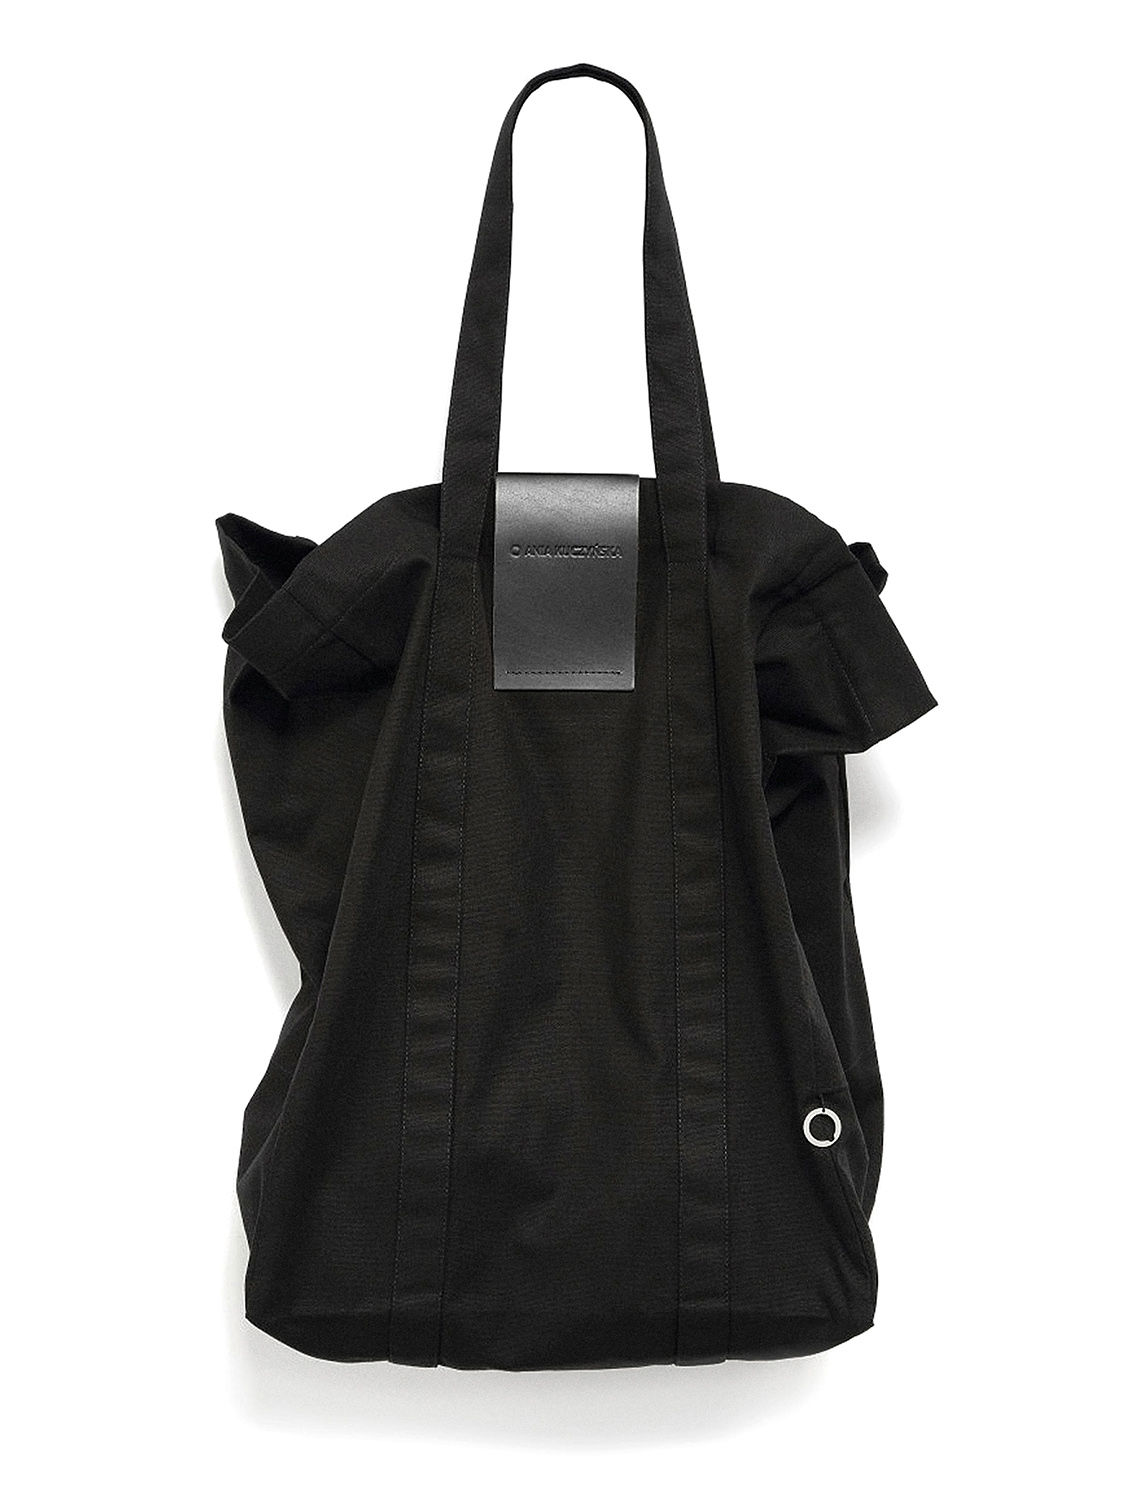 Shanghai Couture Black tote bag with leather logo - Ania Kuczyńska